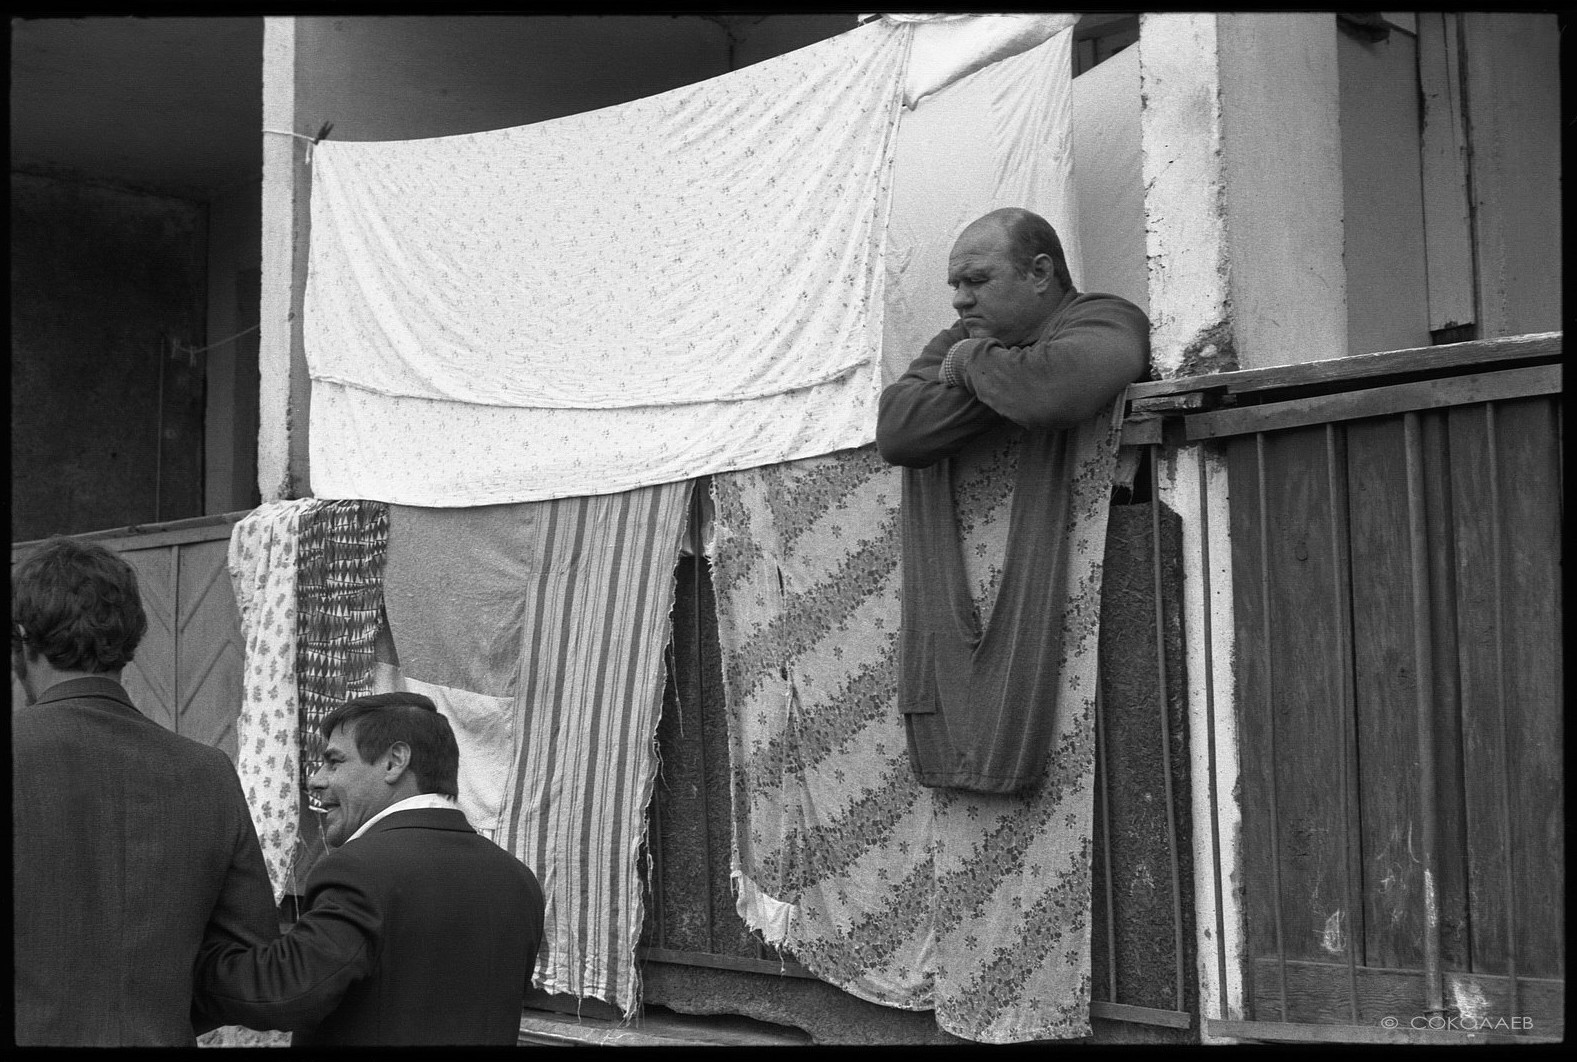 Человек на балконе. Новокузнецк, 1983. Фотограф Владимир Соколаев